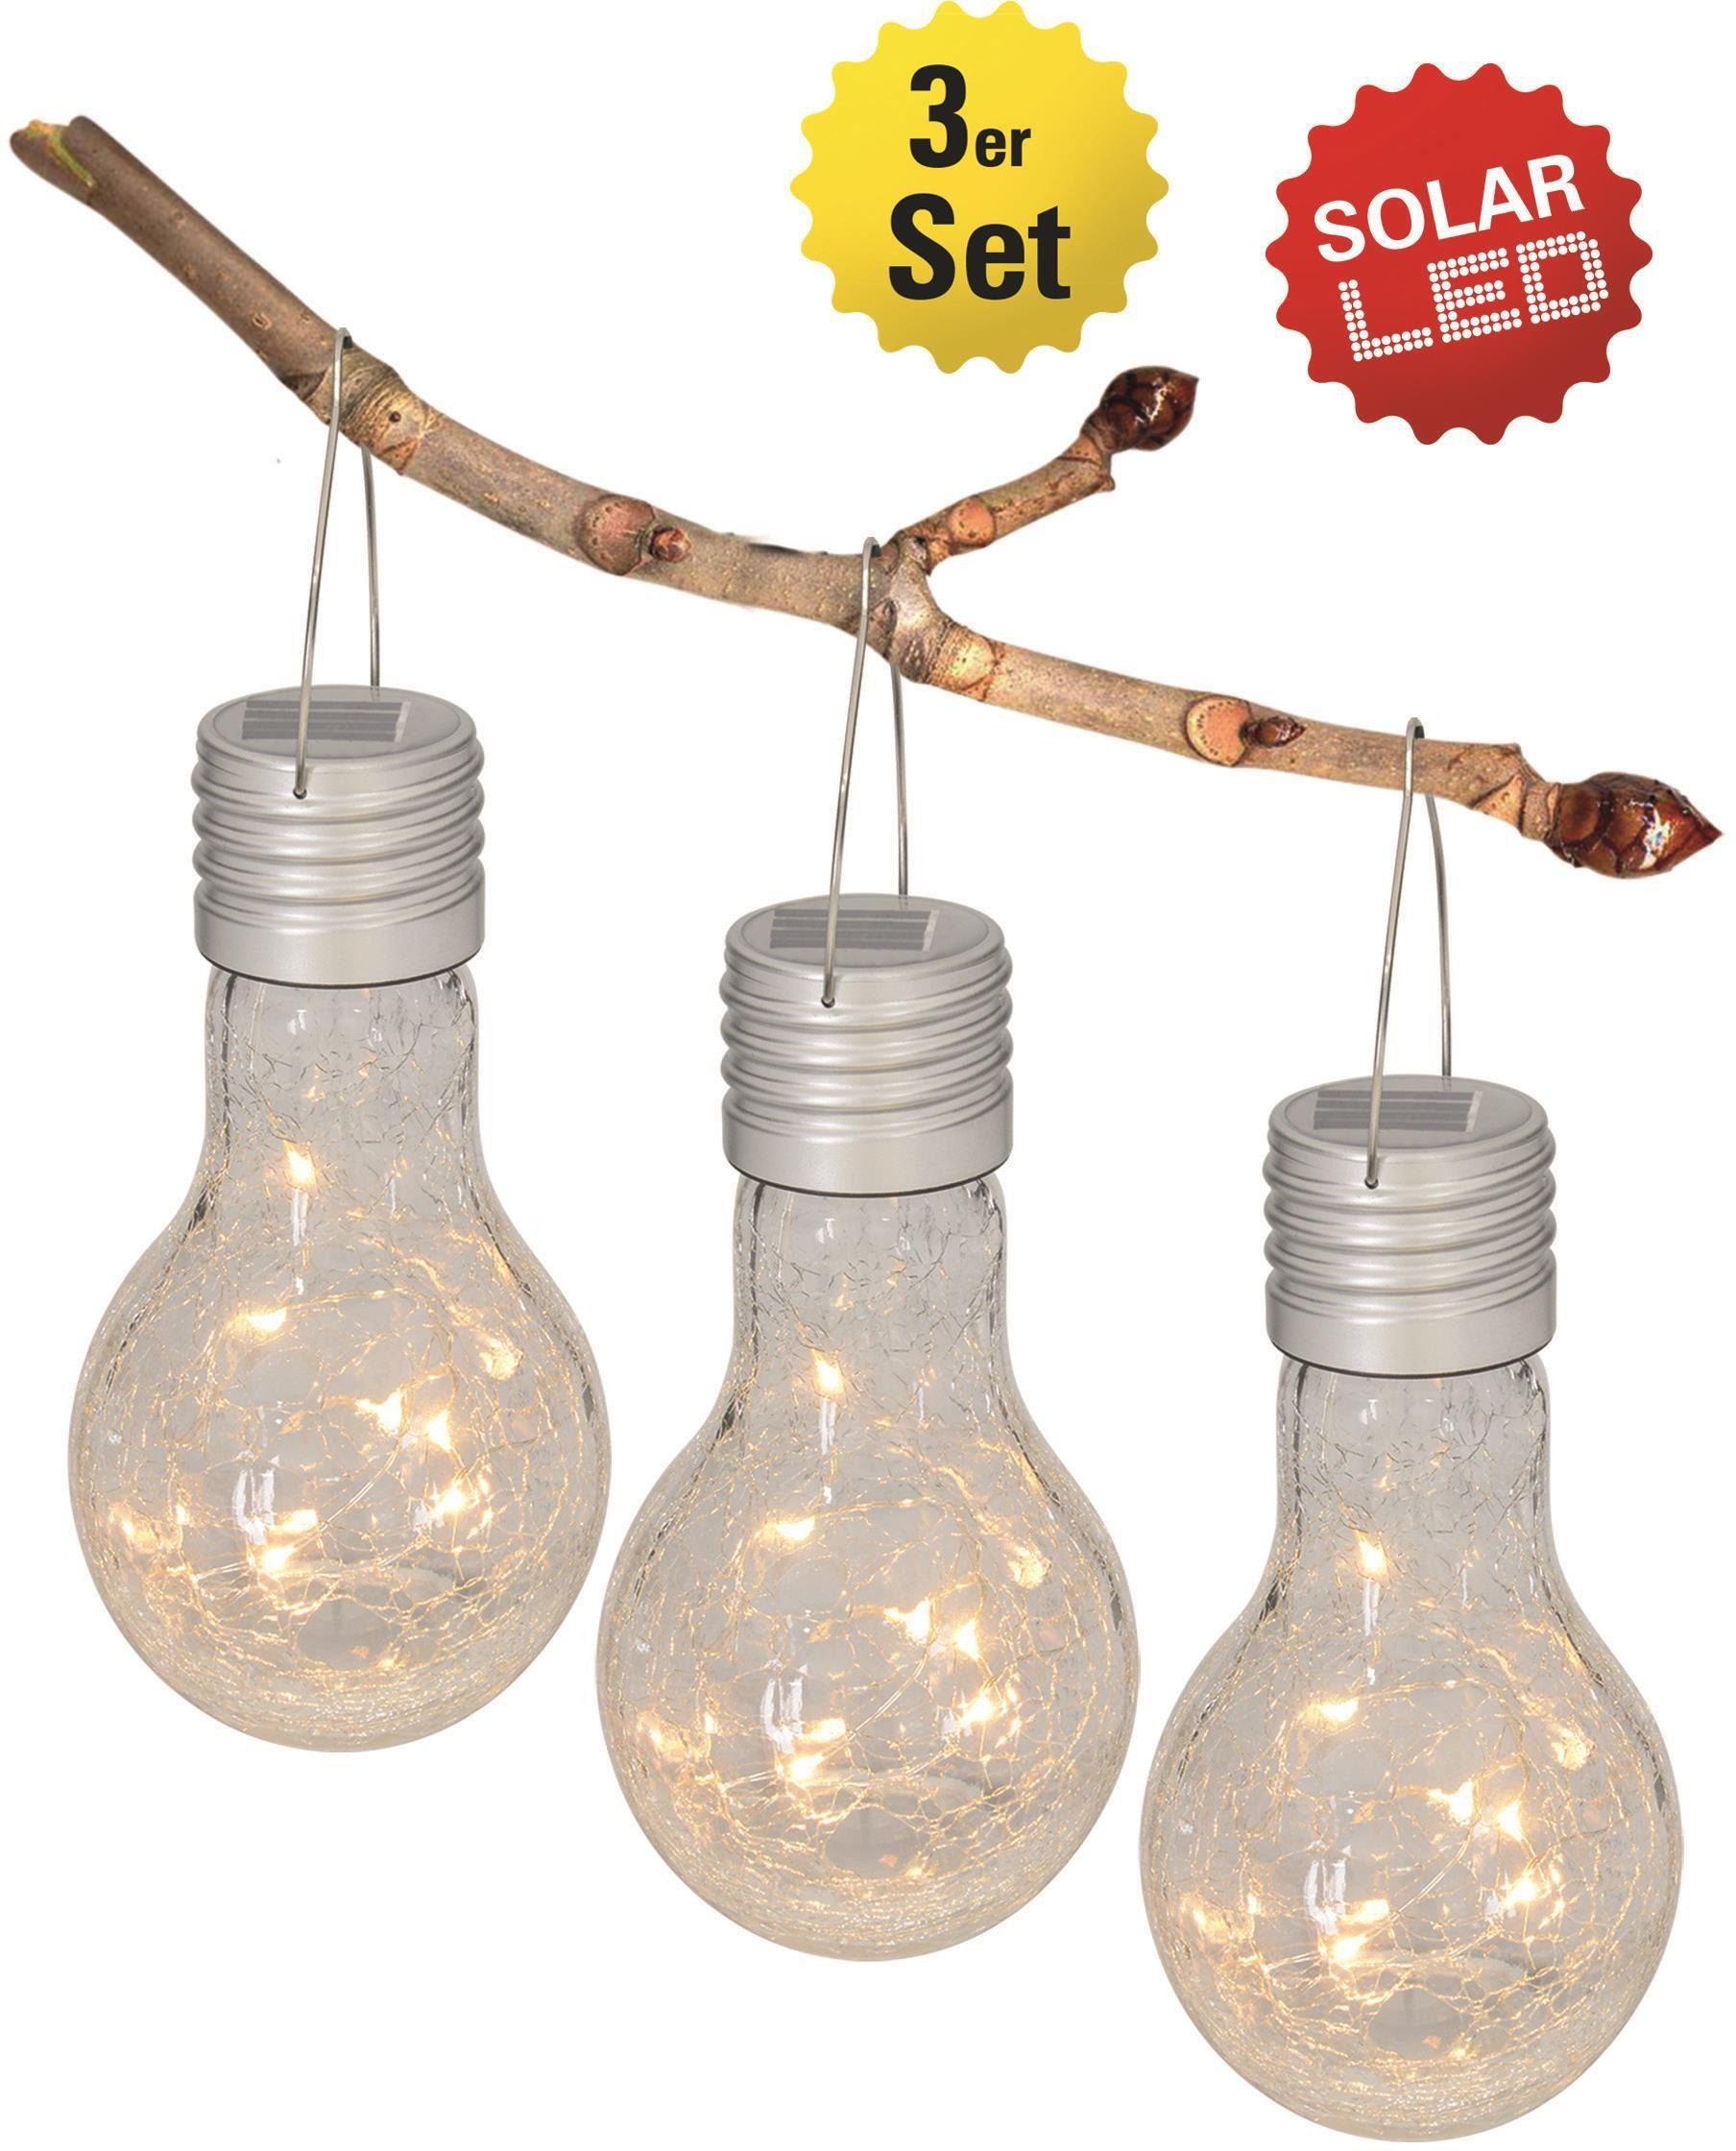 näve LED Gartenleuchte Crackle Bulb, LED fest integriert, Warmweiß,  Material: Glas, Farbe: klar, Aufhängemöglichkeit, 3er Set